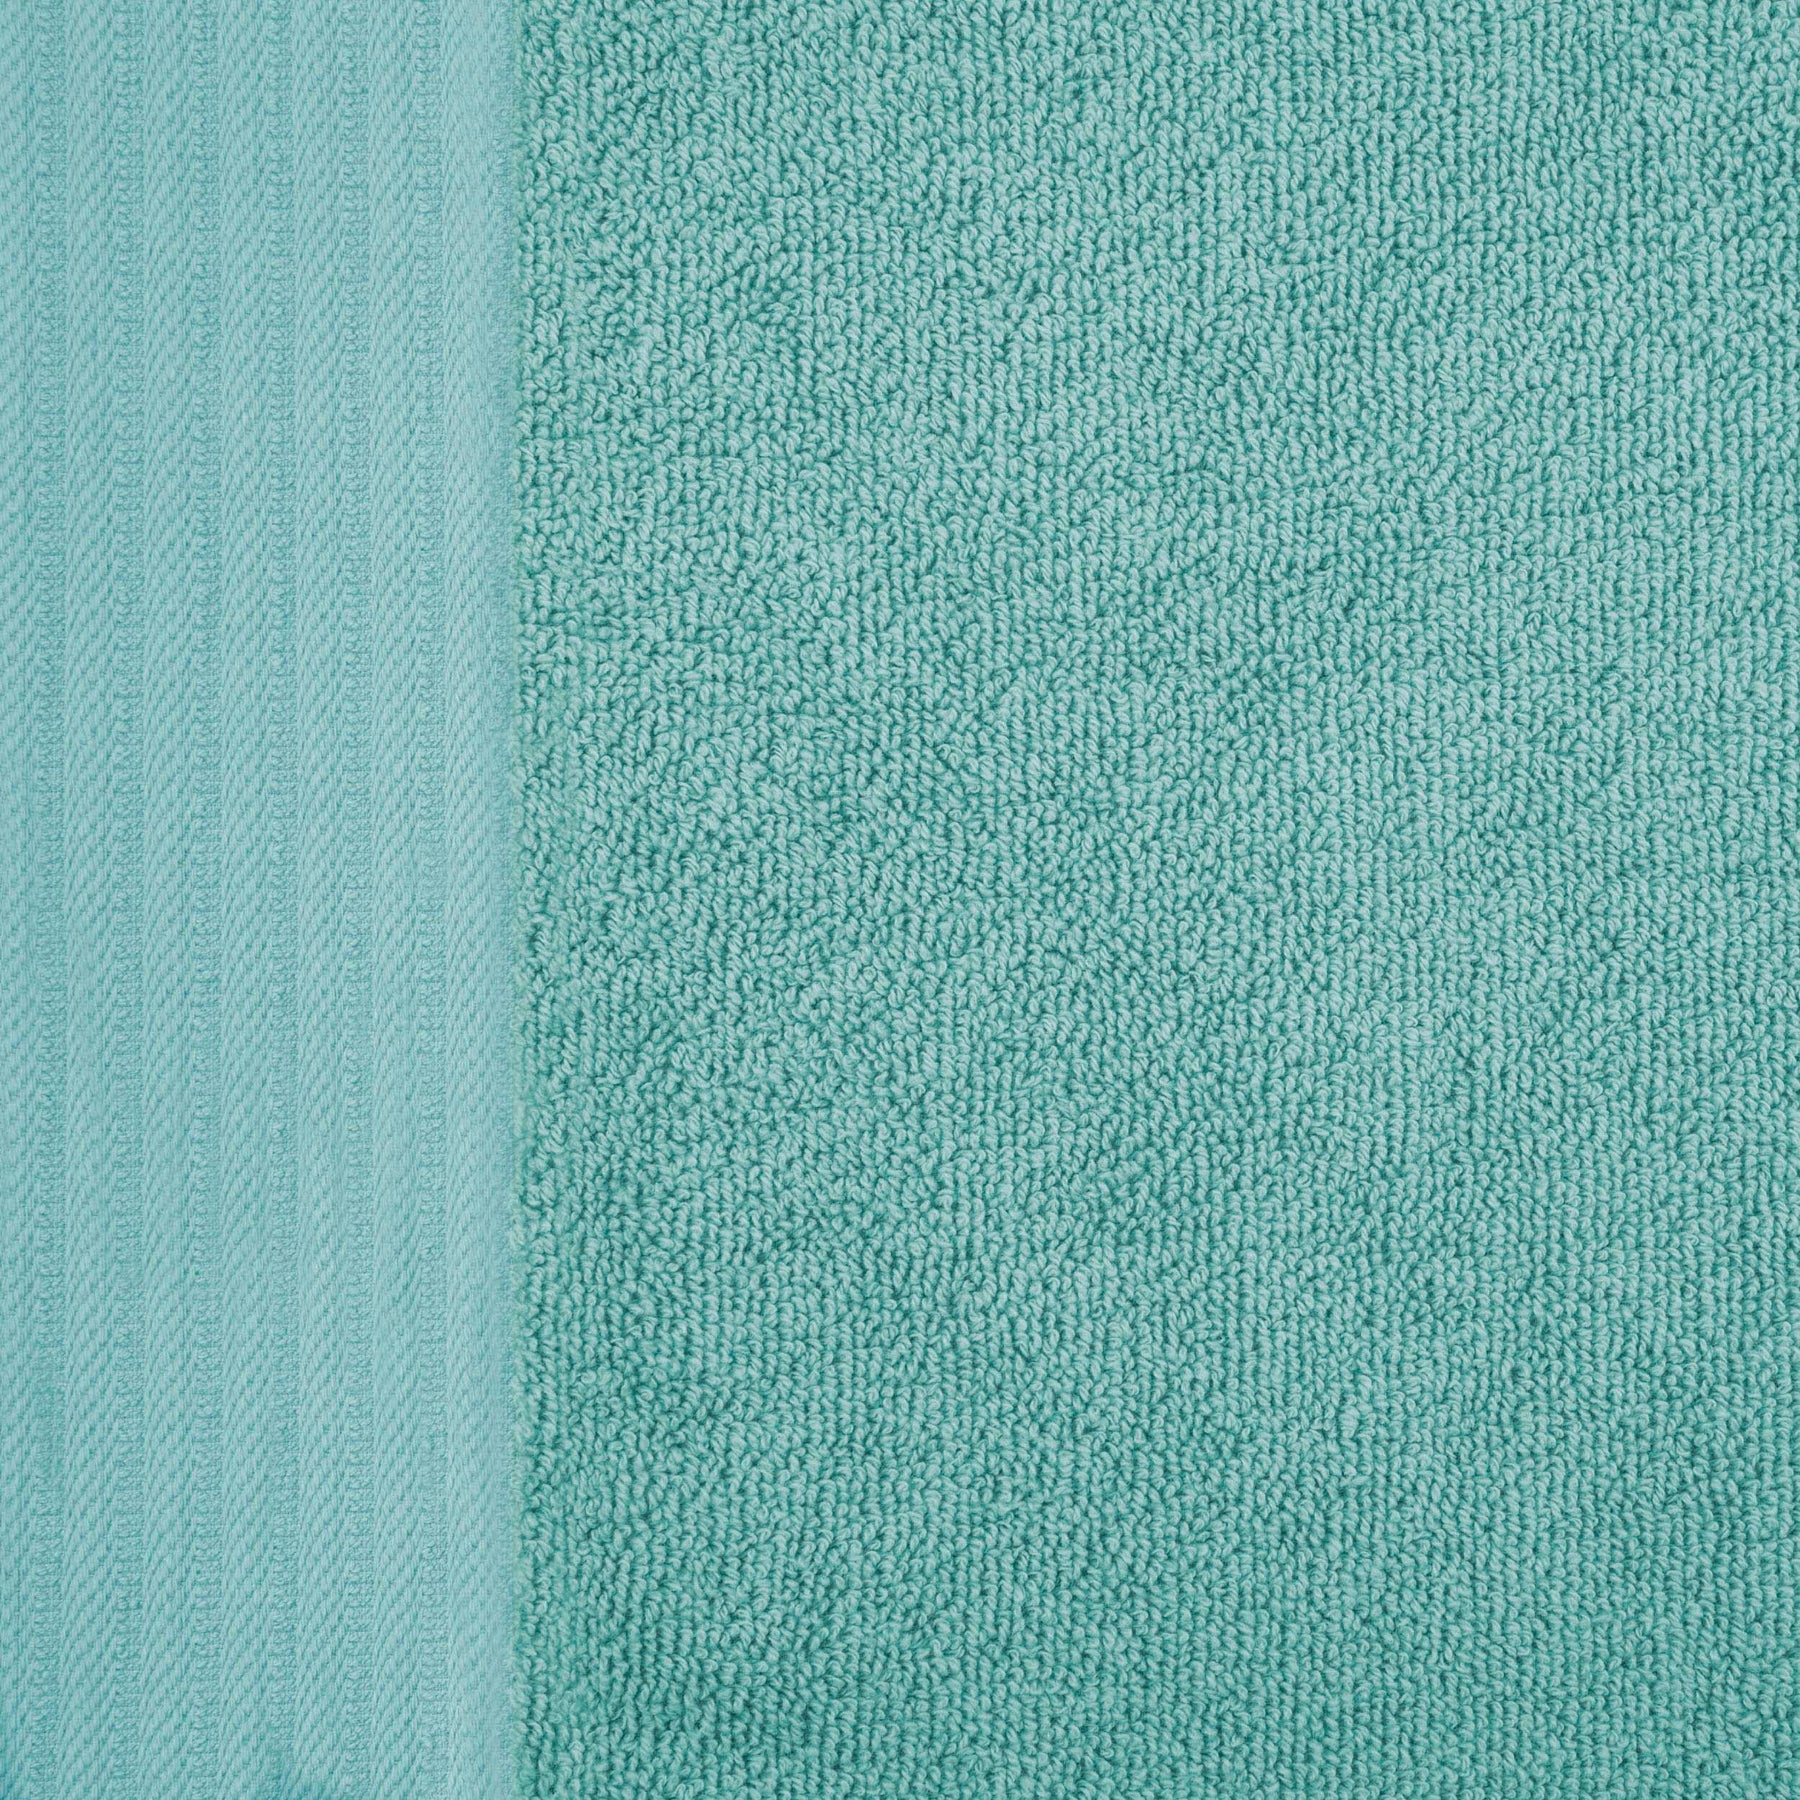 Premium Turkish Cotton Herringbone Solid Assorted 6-Piece Towel Set - Cascade